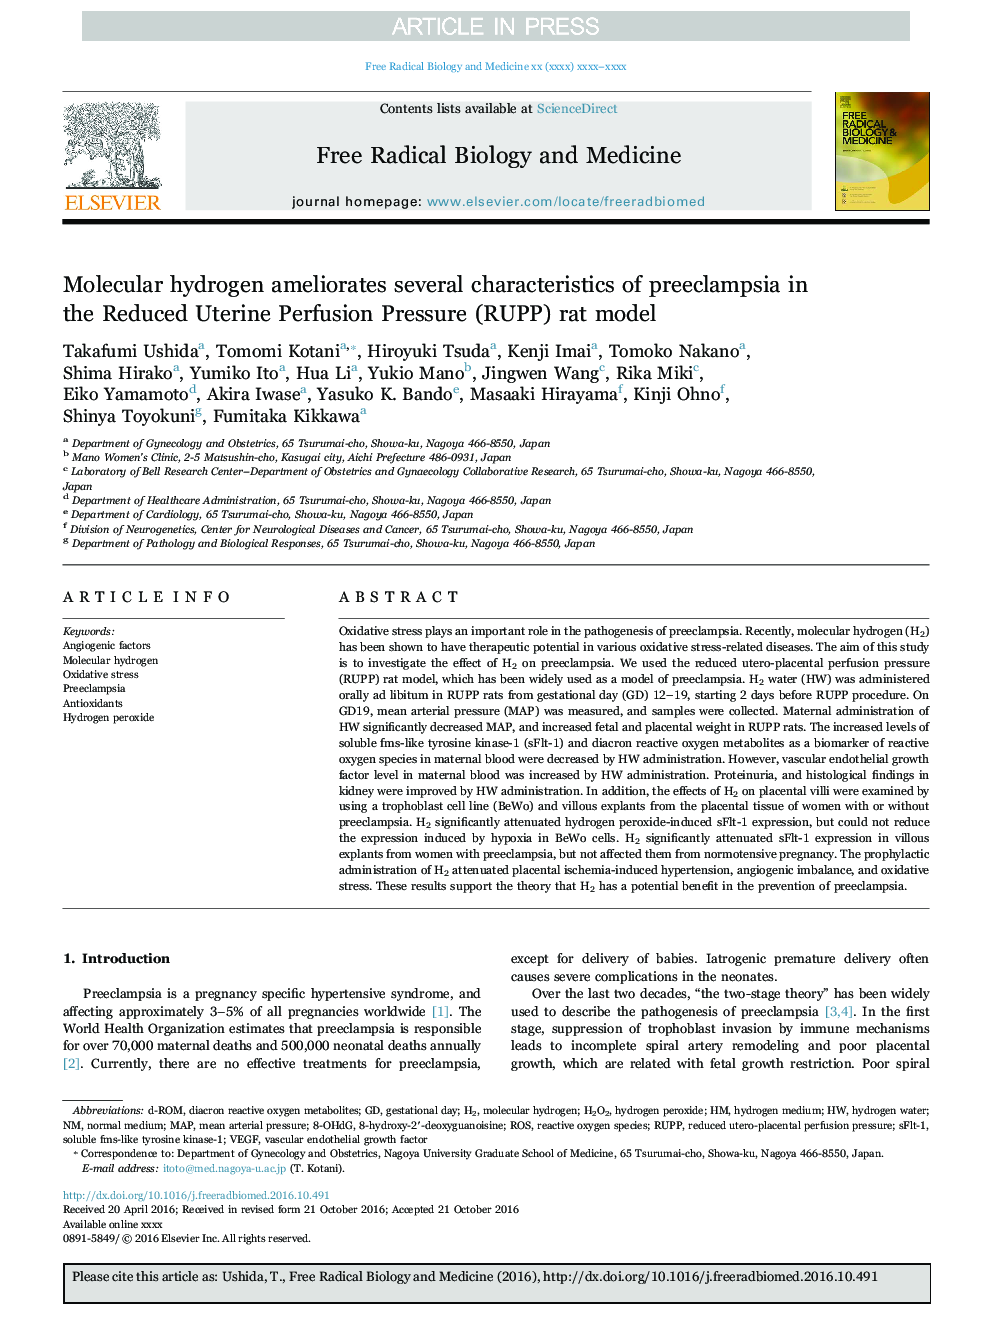 Molecular hydrogen ameliorates several characteristics of preeclampsia in the Reduced Uterine Perfusion Pressure (RUPP) rat model